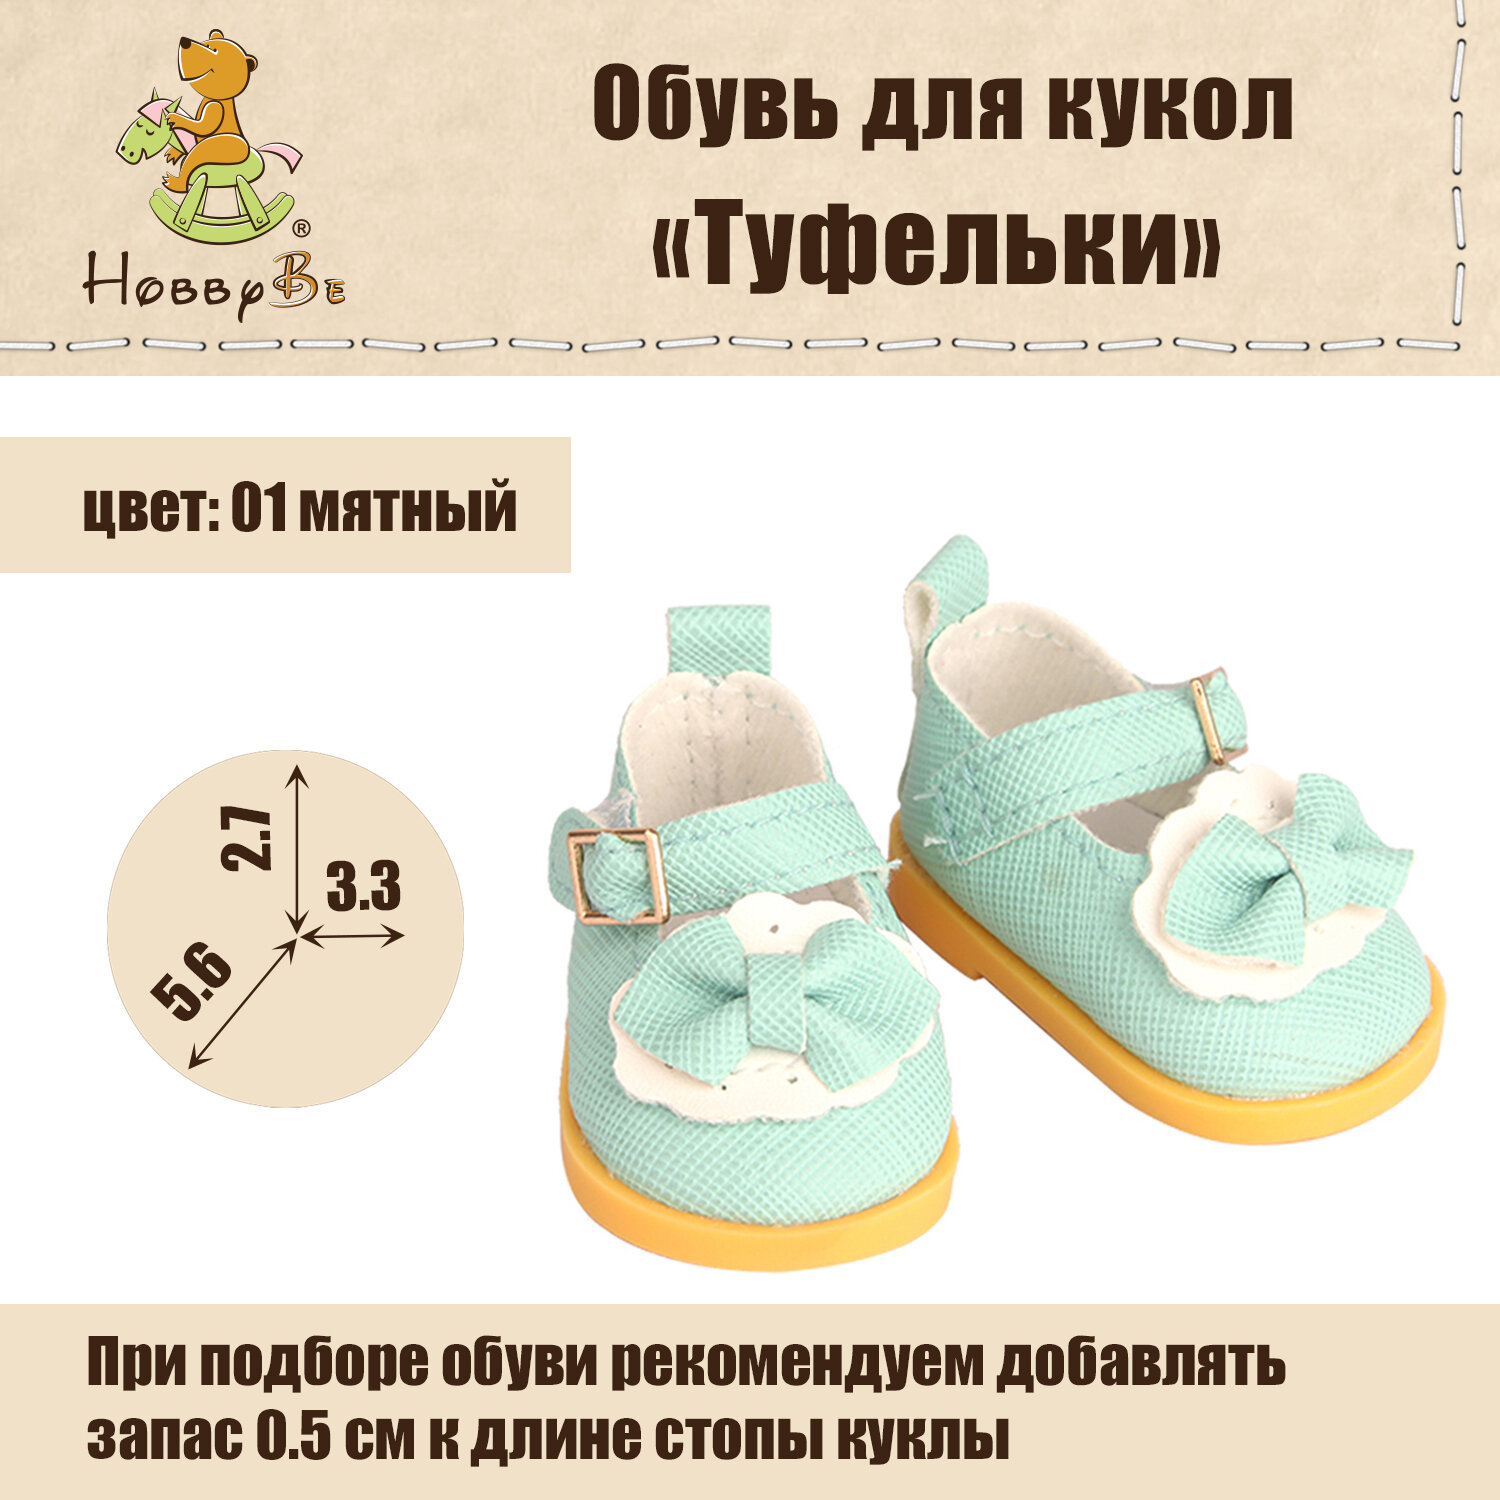 Обувь для кукол "HobbyBe" KBG-8 аксессуары "Туфельки" 5.5 см 01 мятный